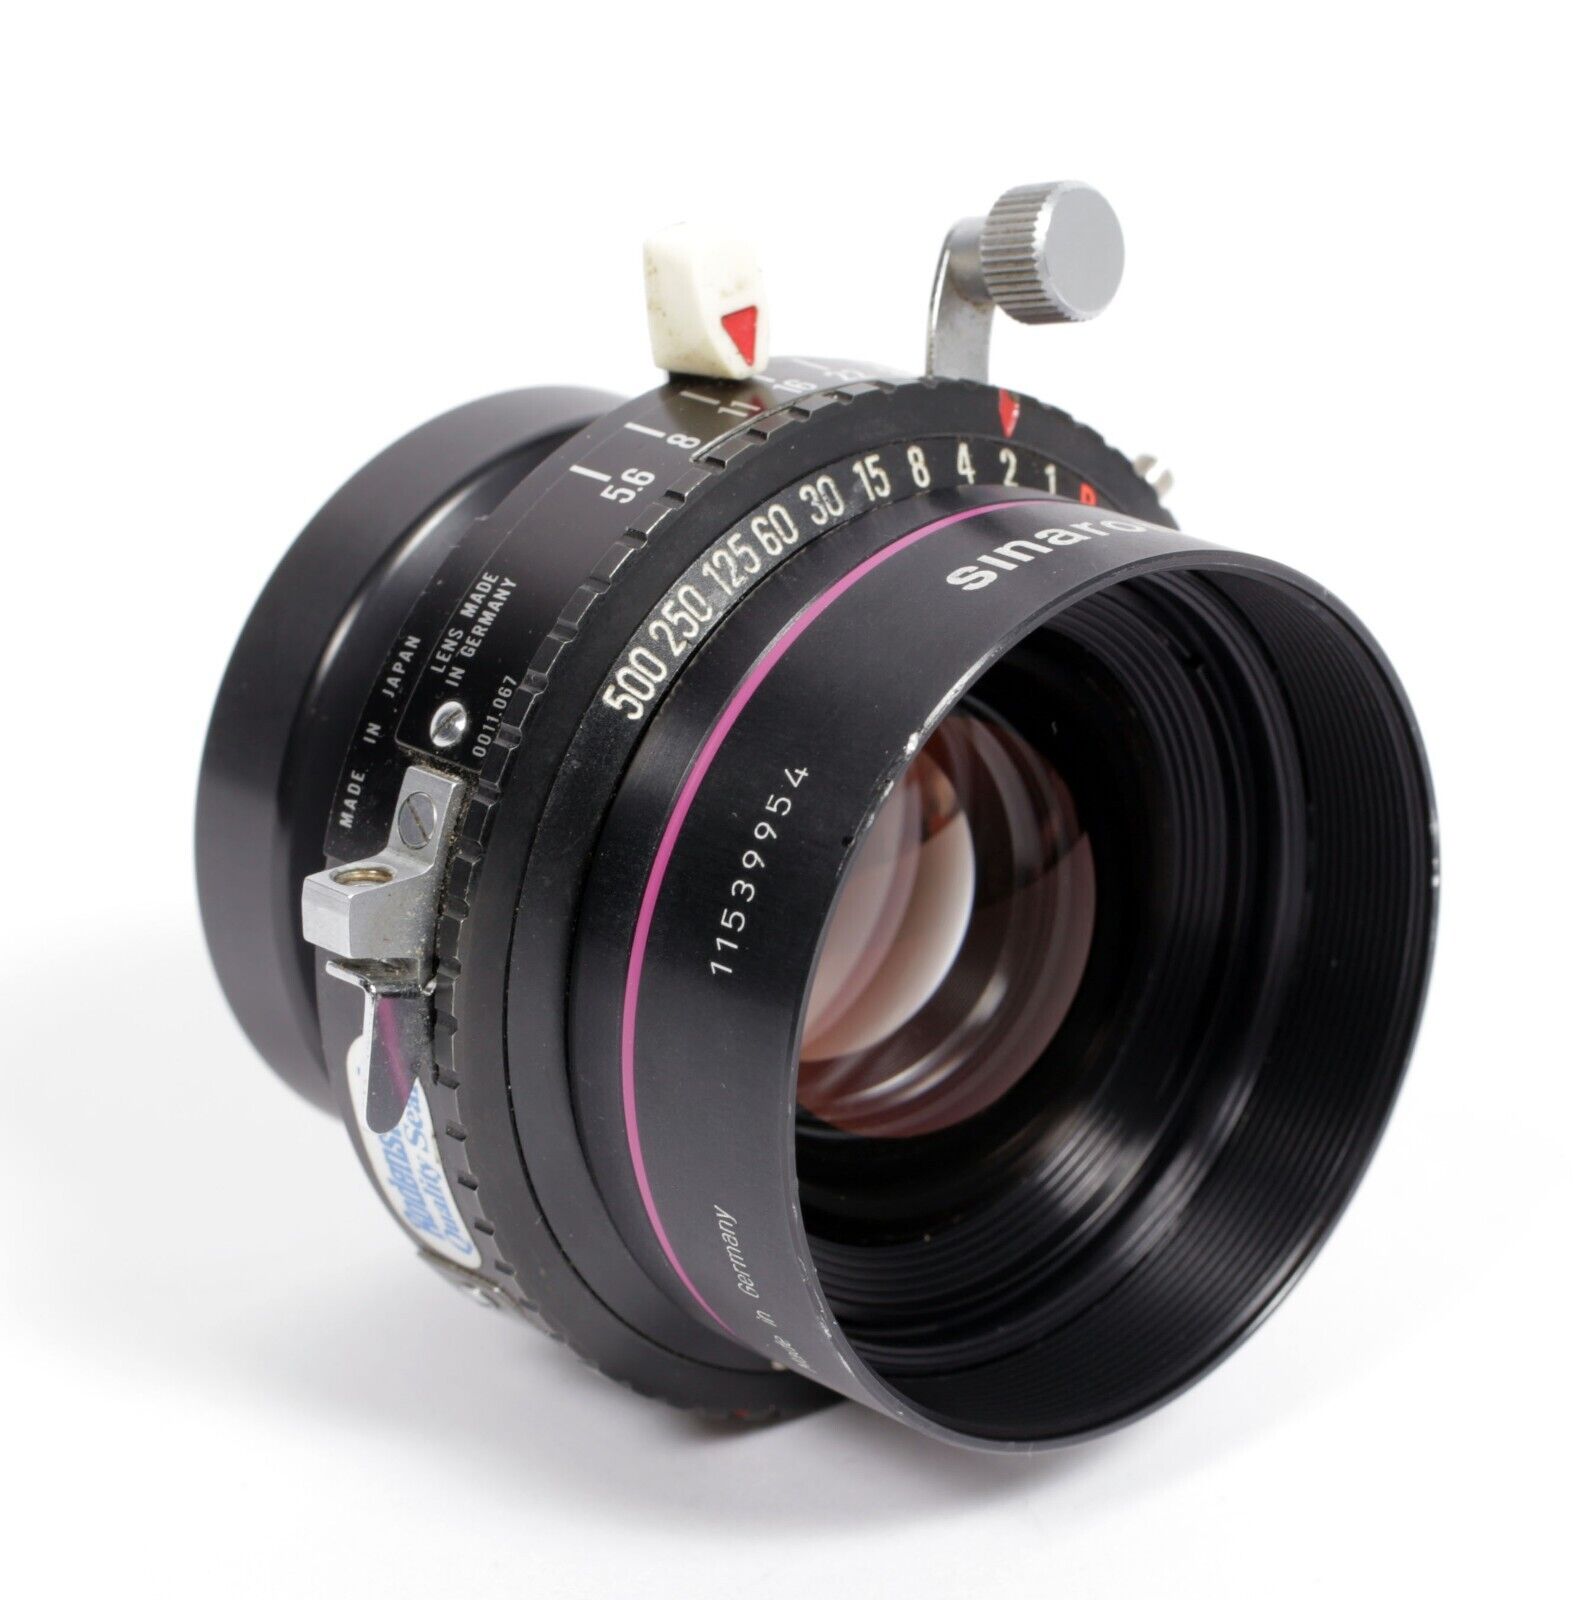 Rodenstock Apo Sironar S 135mm F5.6 Lens in Copal #0 Shutter